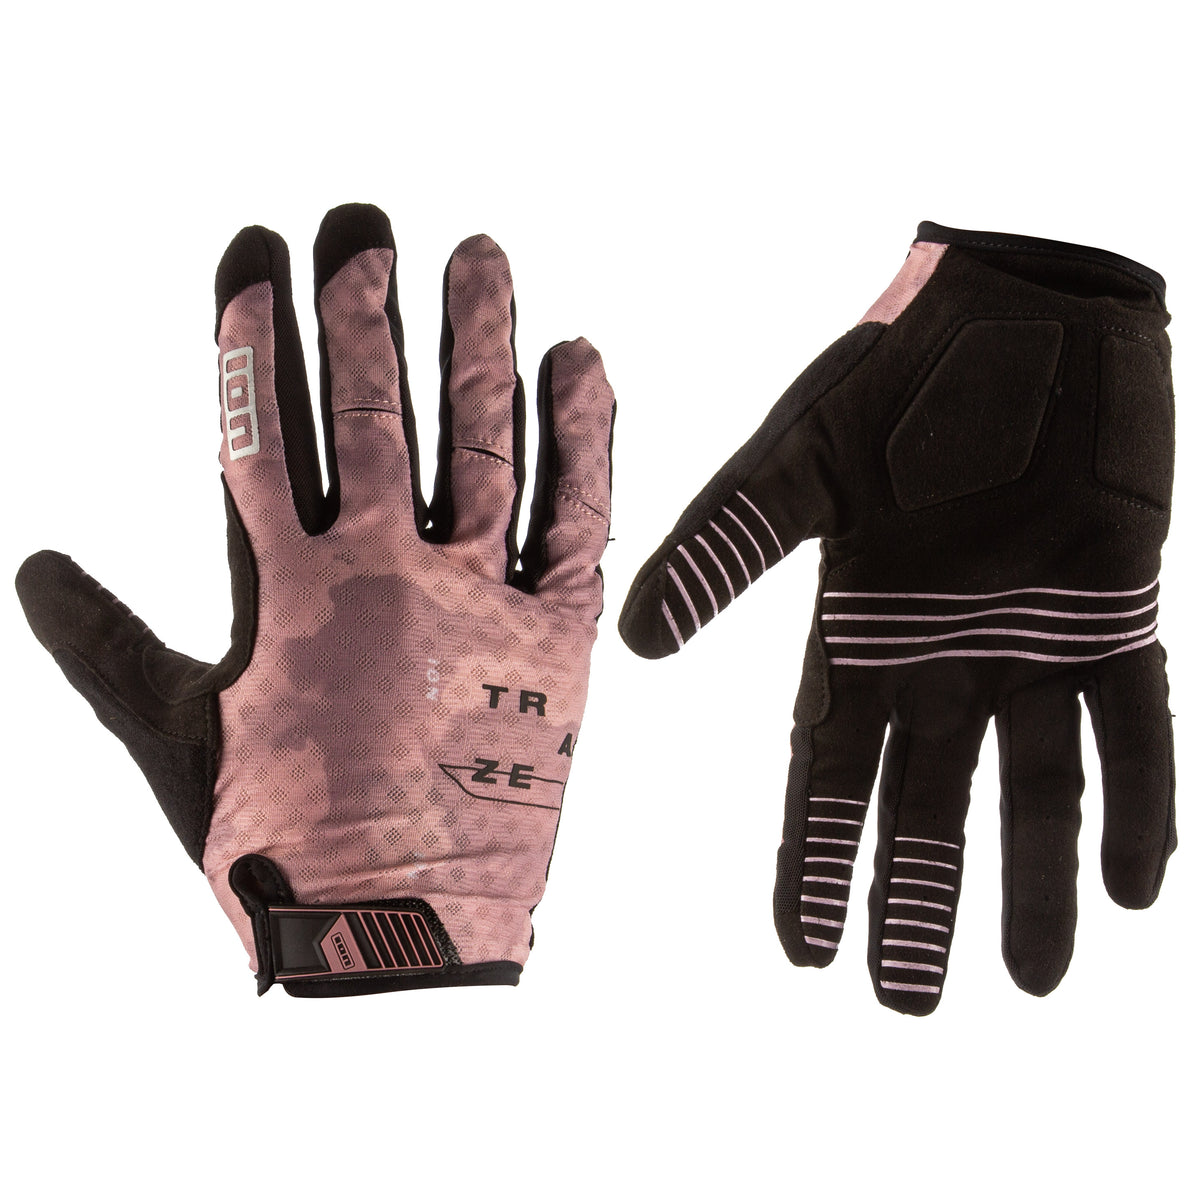 Traze Gloves Long - ION